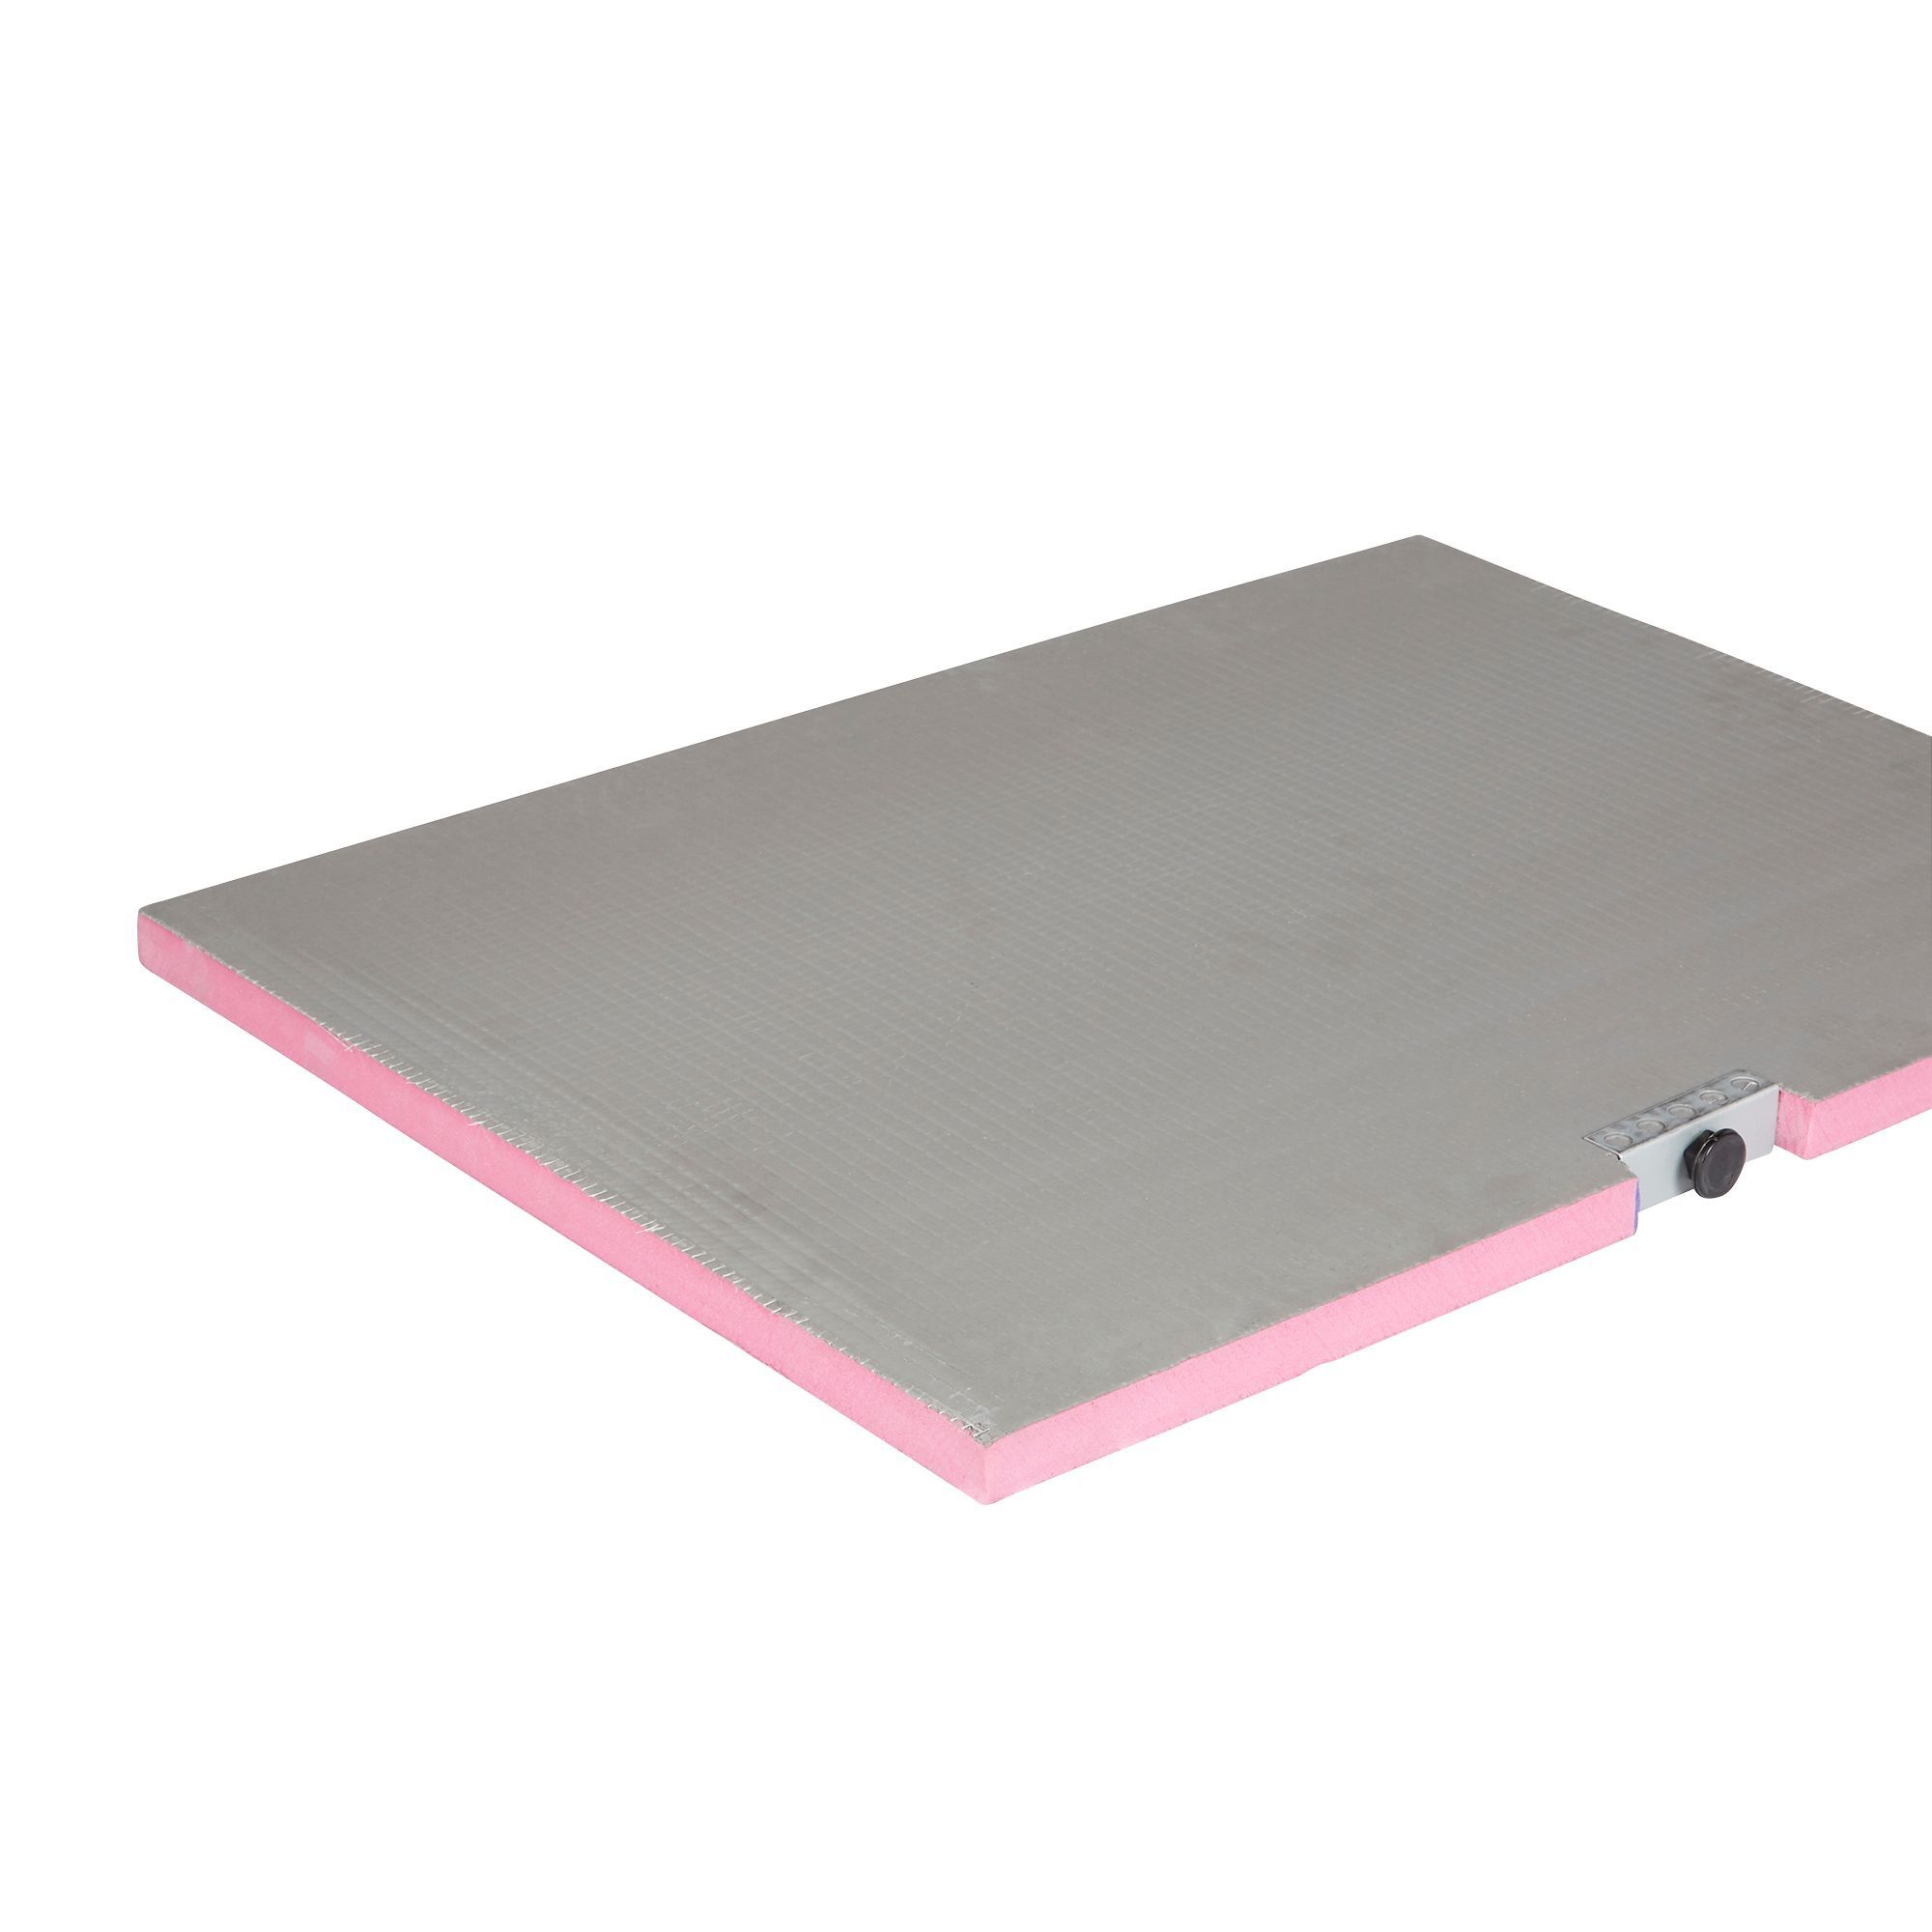 Qboard Pink Bath panel (H)85cm (W)60cm